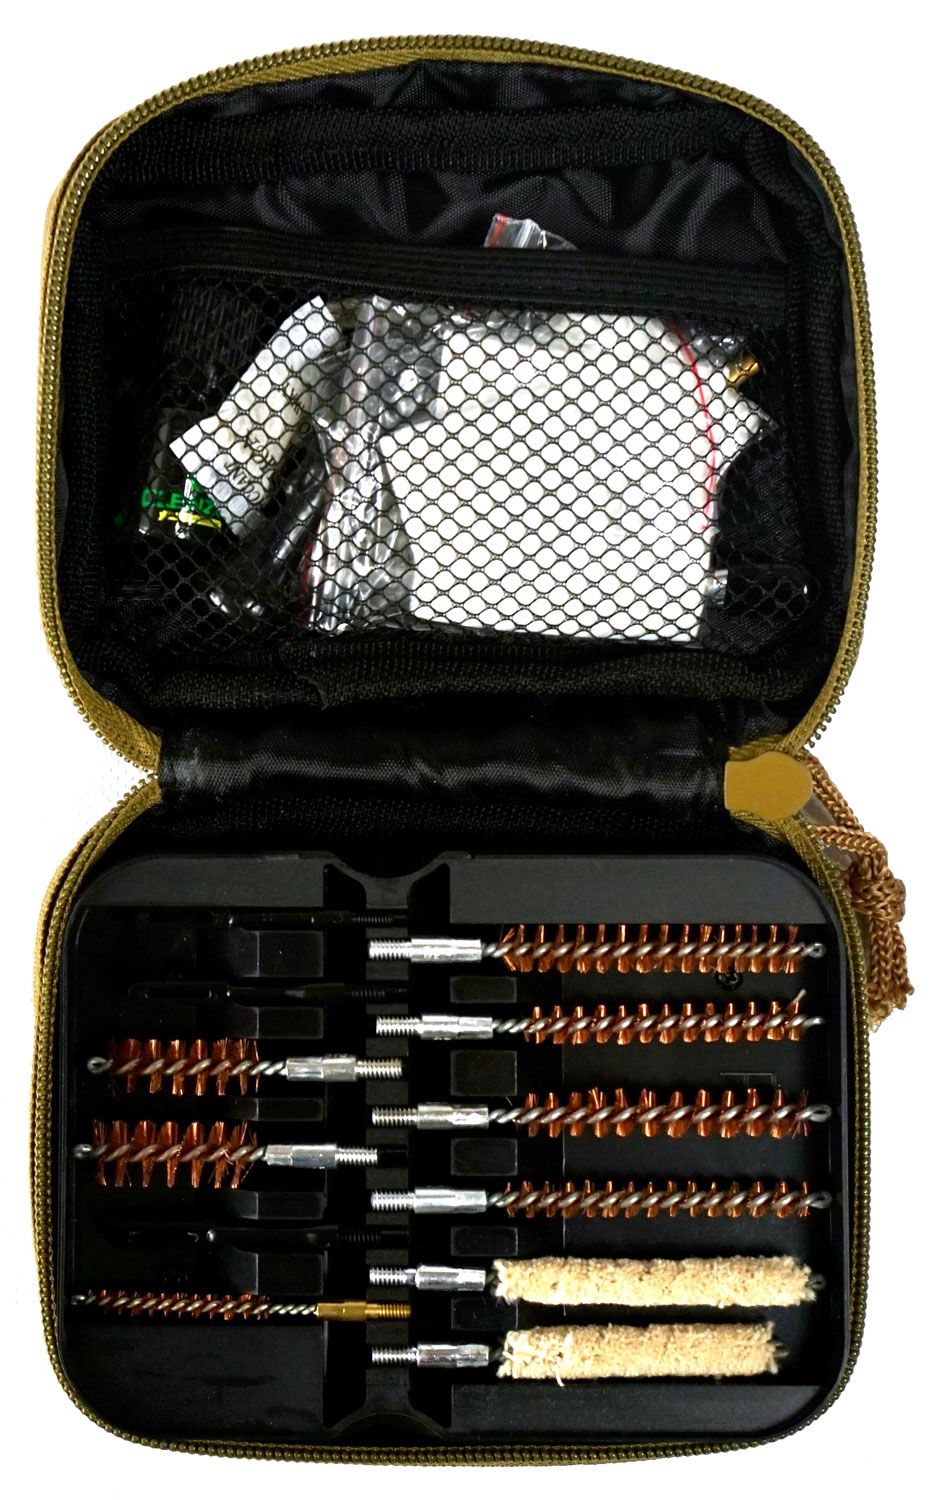 Clenzoil 2830 Multi-Caliber Rifle Multi-Caliber Cleaning Kit 13 Piece Tan Case